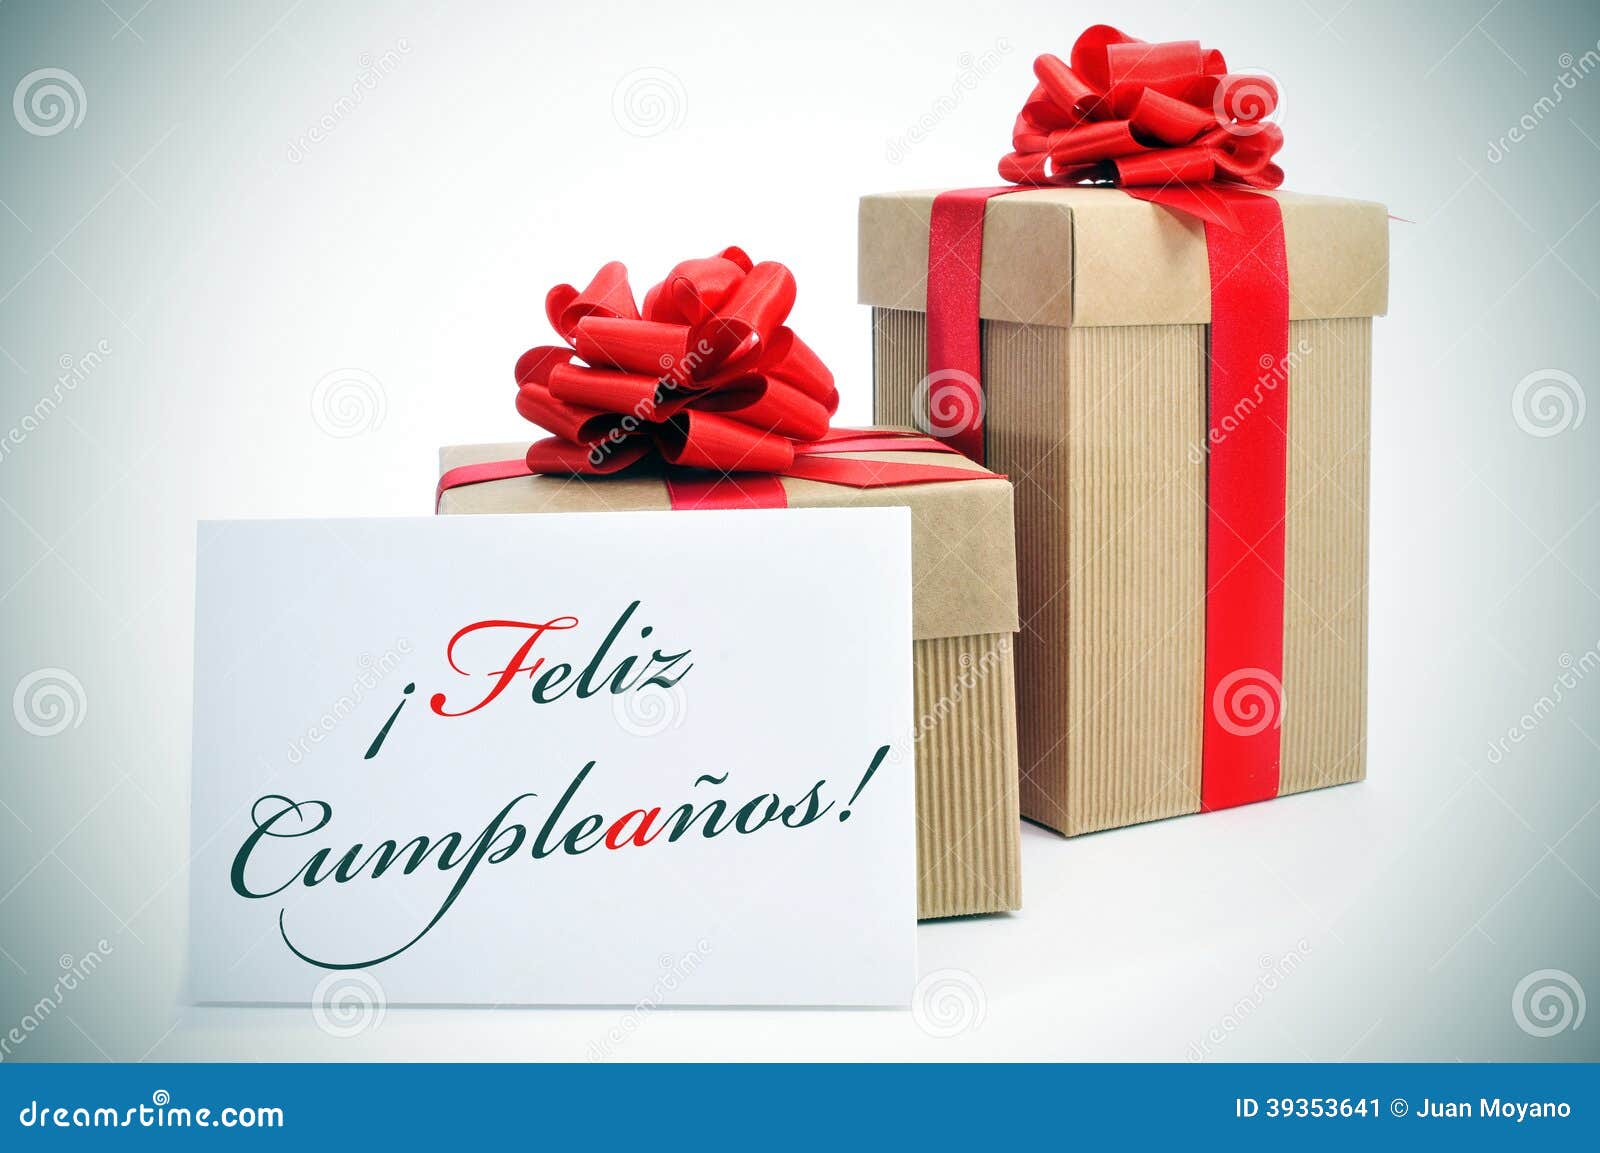 feliz cumpleanos, happy birthday written in spanish